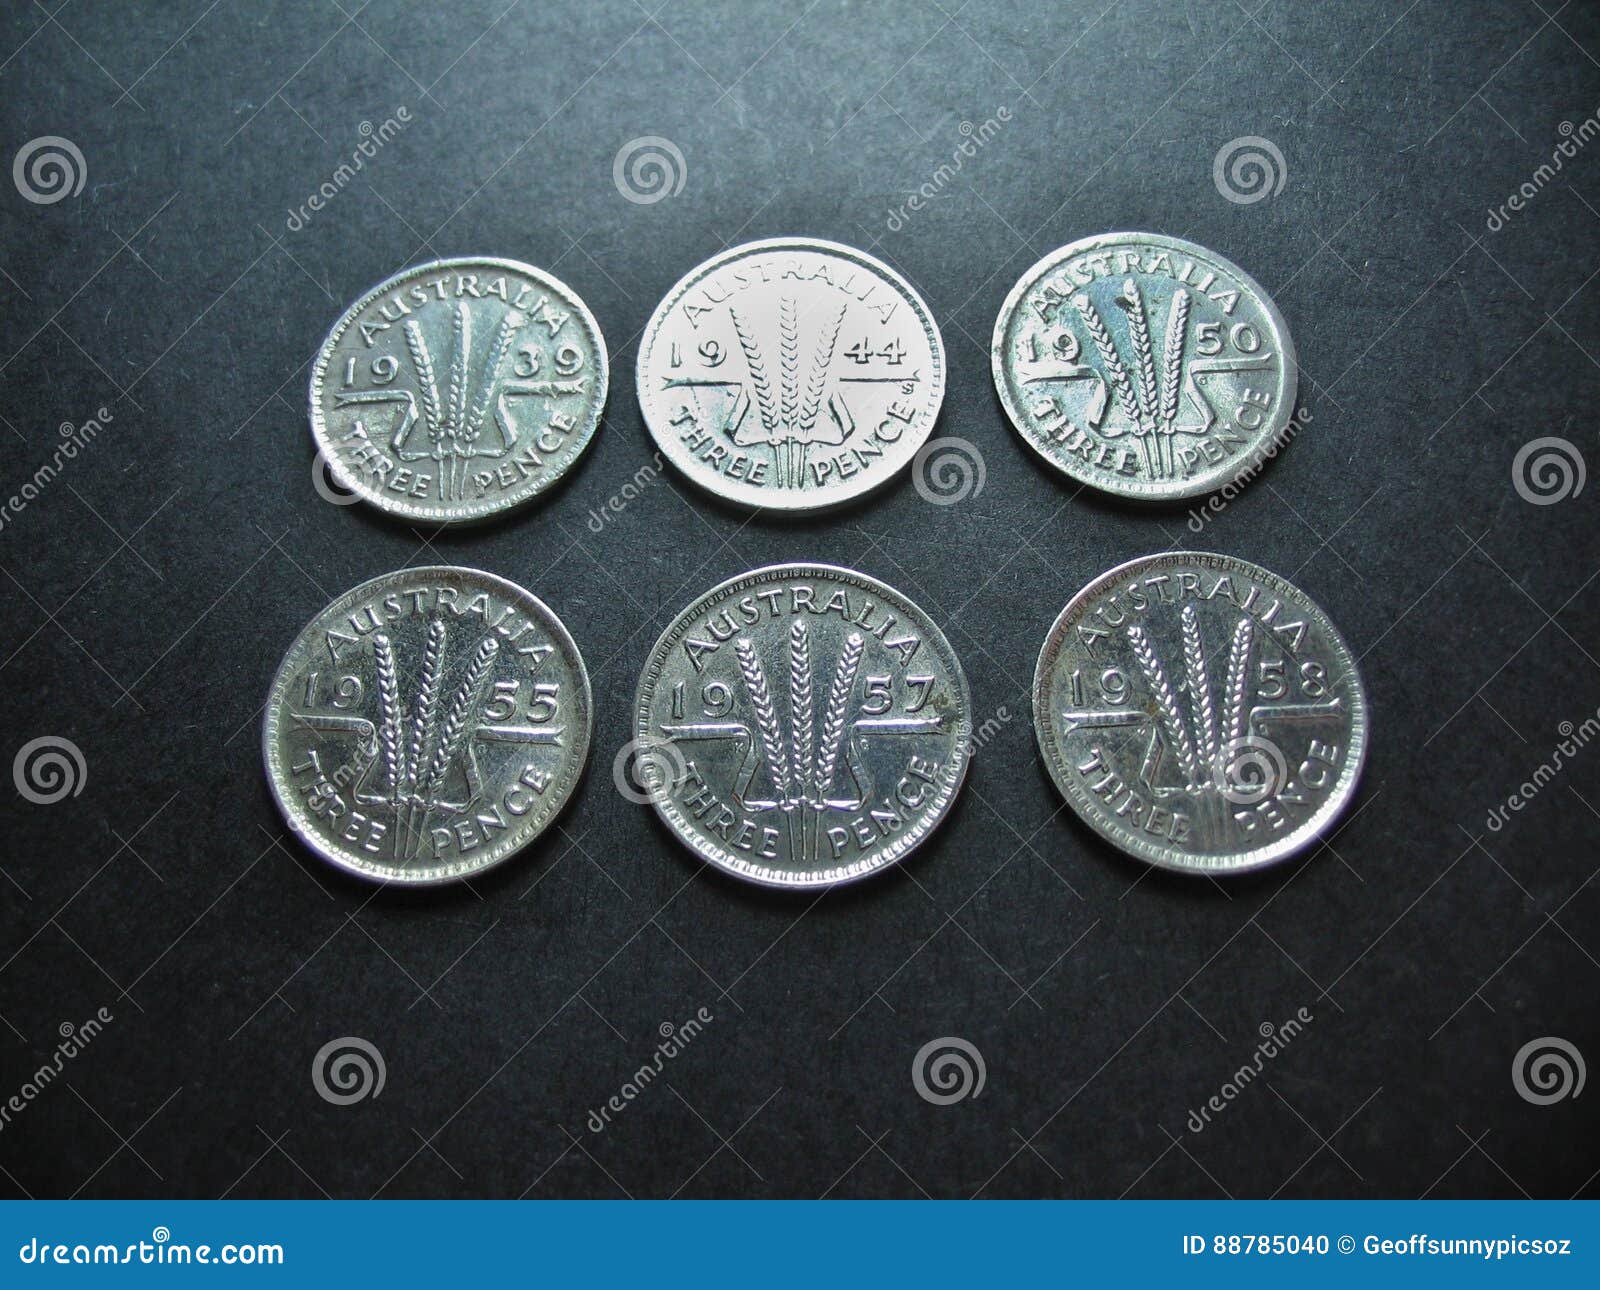 coins vintage silver australian threepence.